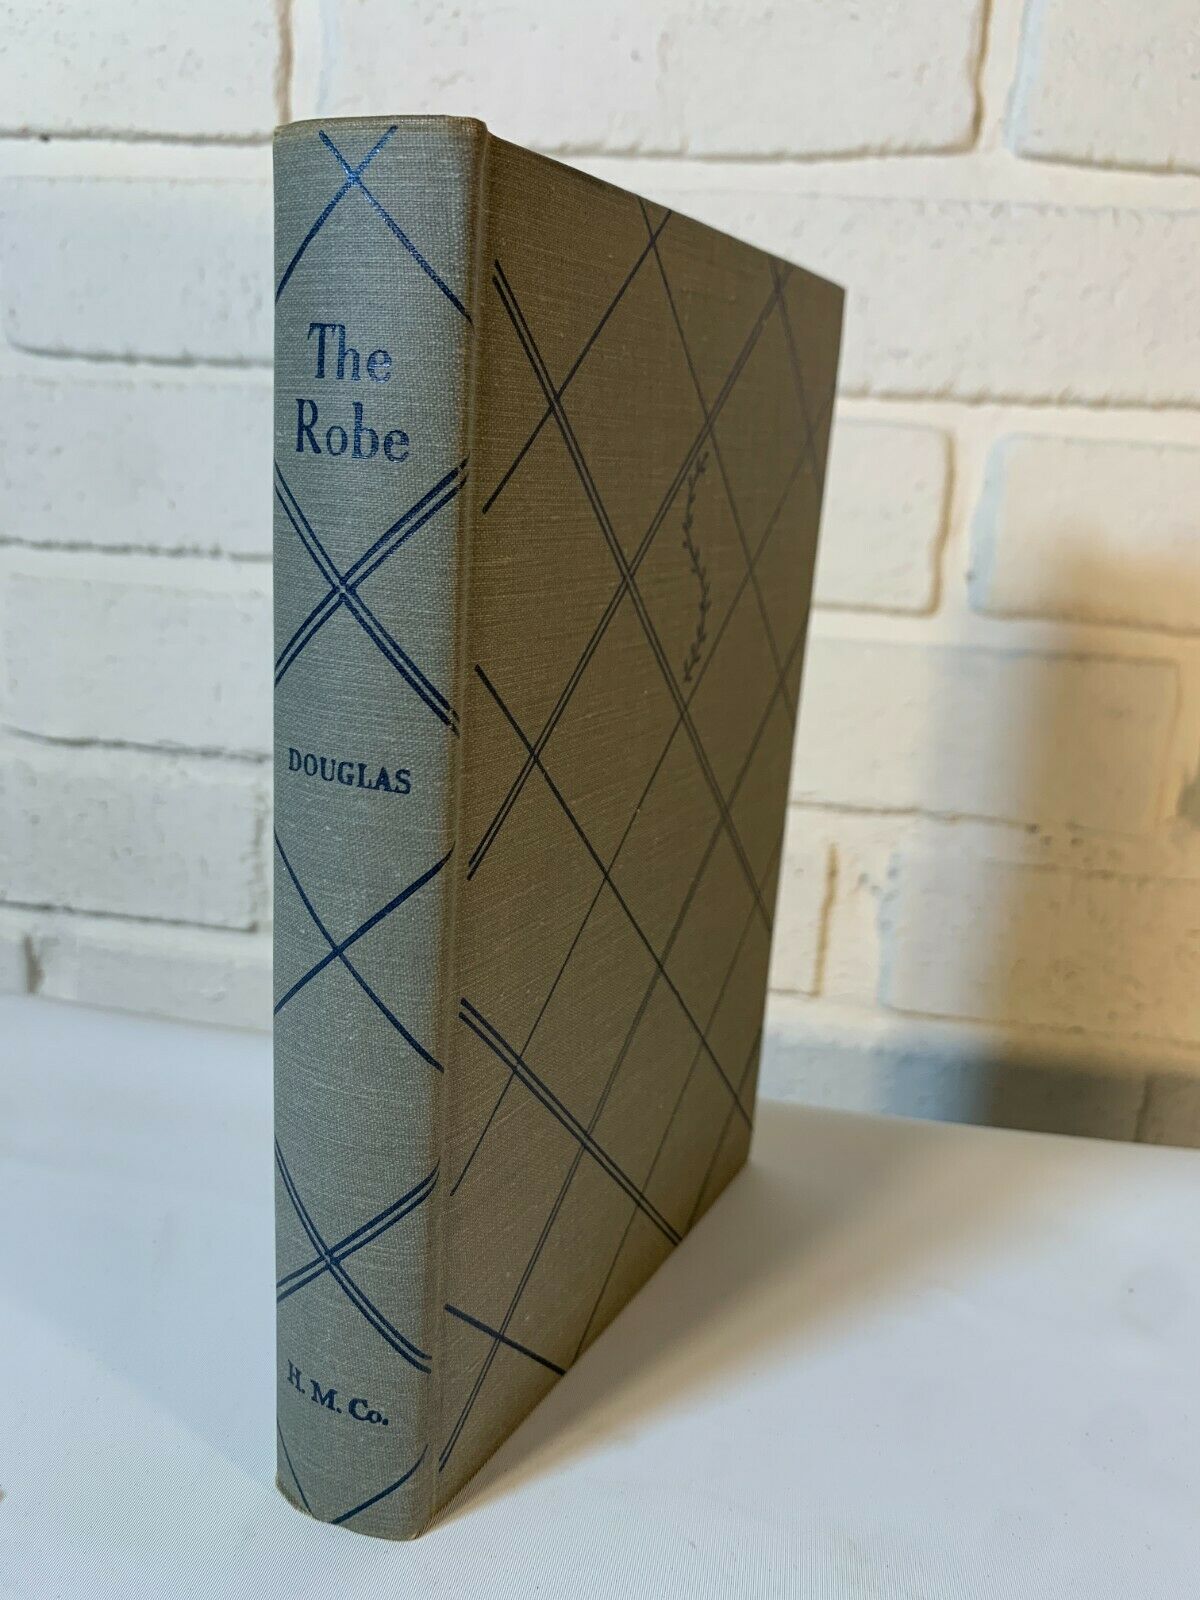 The Robe by Lloyd C.Douglas (1942)